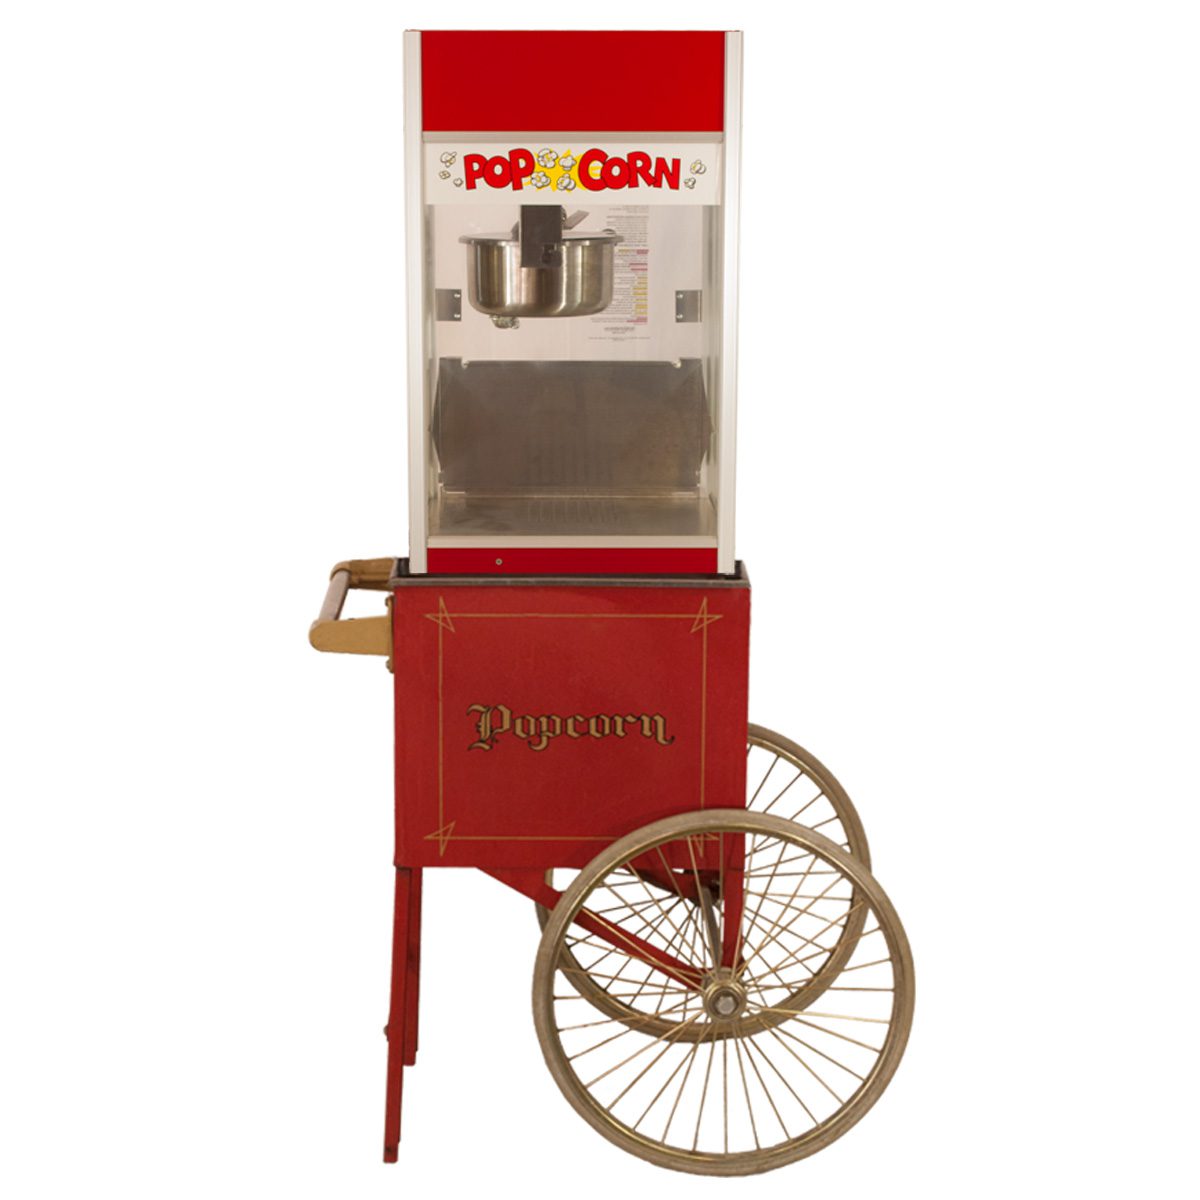 https://www.celebrationspartyrentals.com/wp-content/uploads/2015/05/Popcorn-Machine-with-Cart.jpg